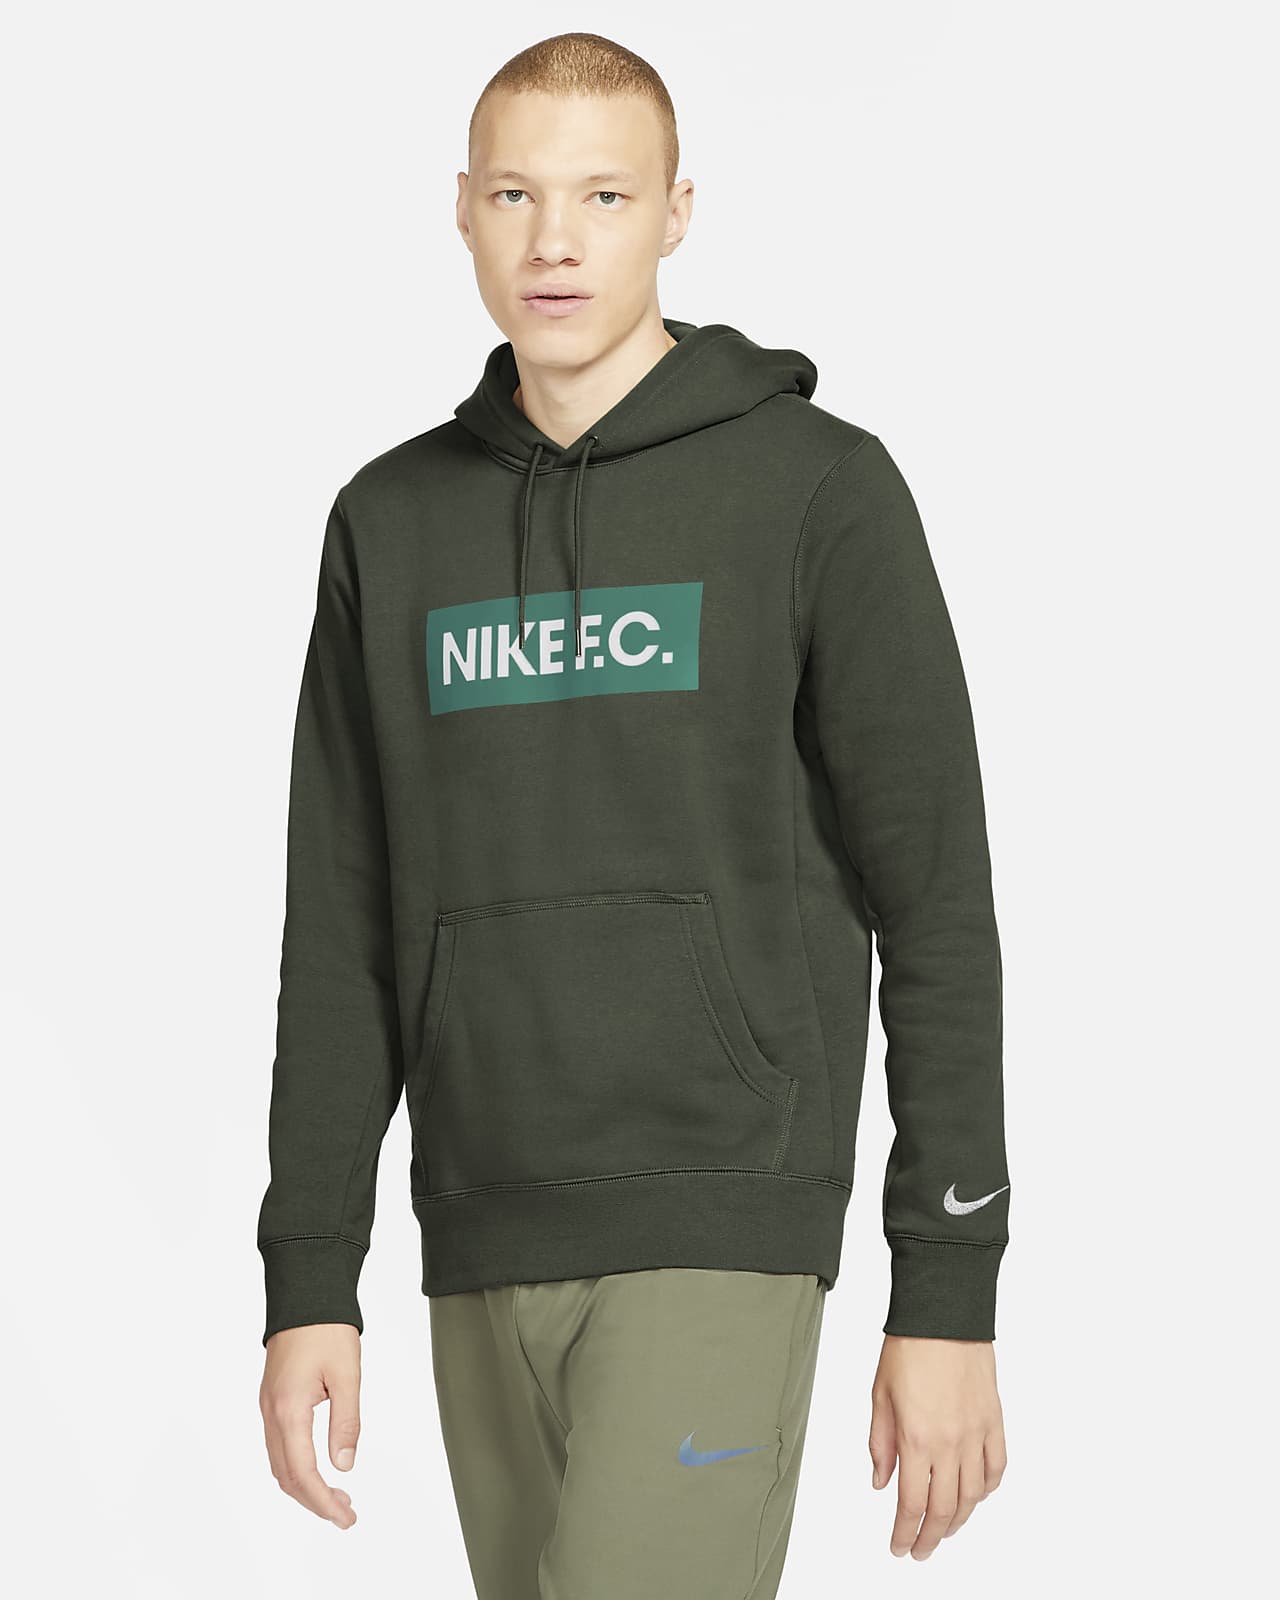 Nike F.C. Men's Pullover Fleece Soccer Hoodie